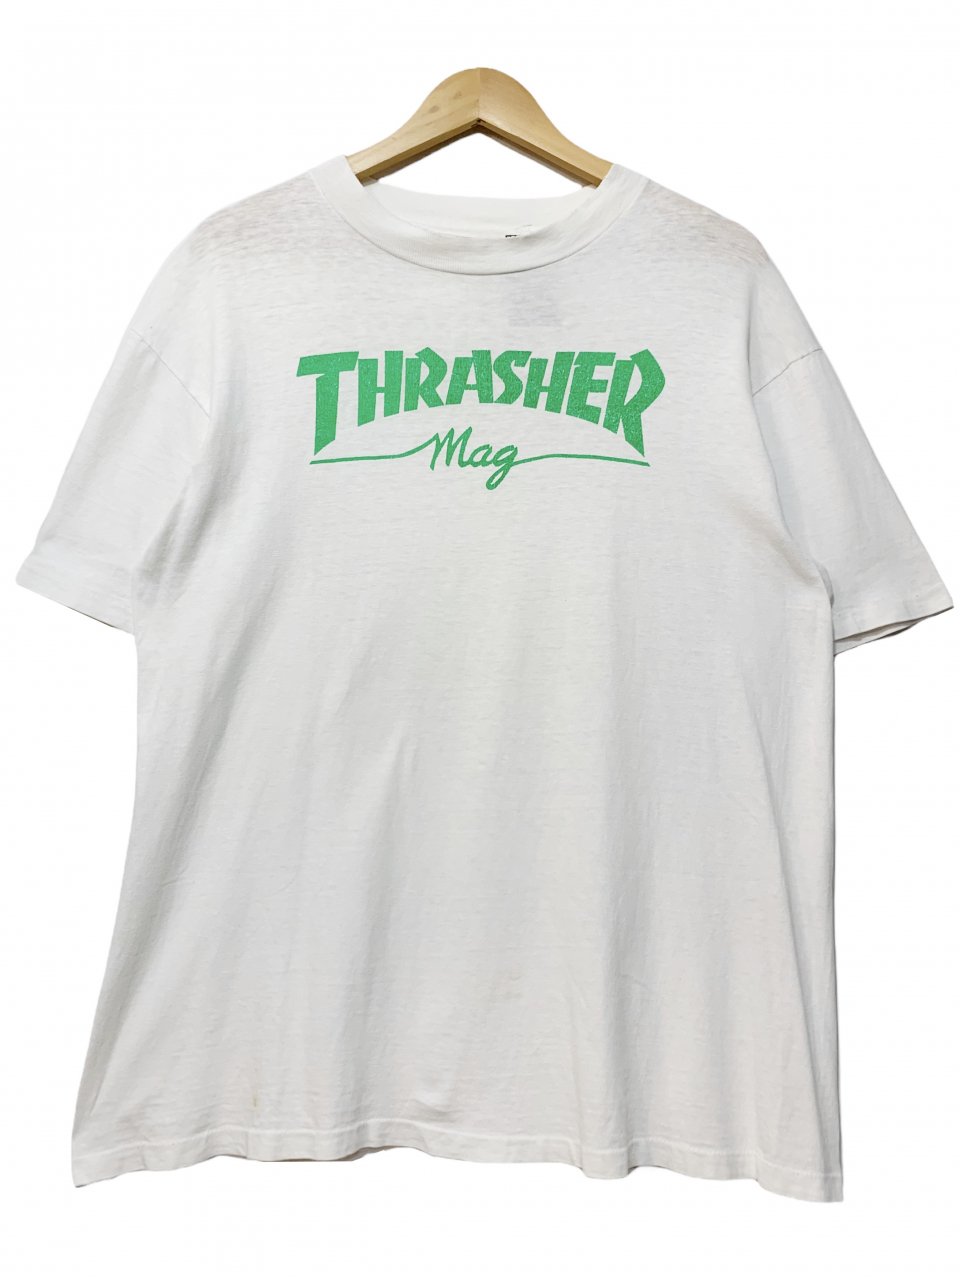 USA製 80s THRASHER MAG Logo Print S/S Tee 白 L スラッシャー 半袖 Tシャツ MAGロゴ マグロゴ OLD  SKATE オールドスケート HANES - NEWJOKE ONLINE STORE